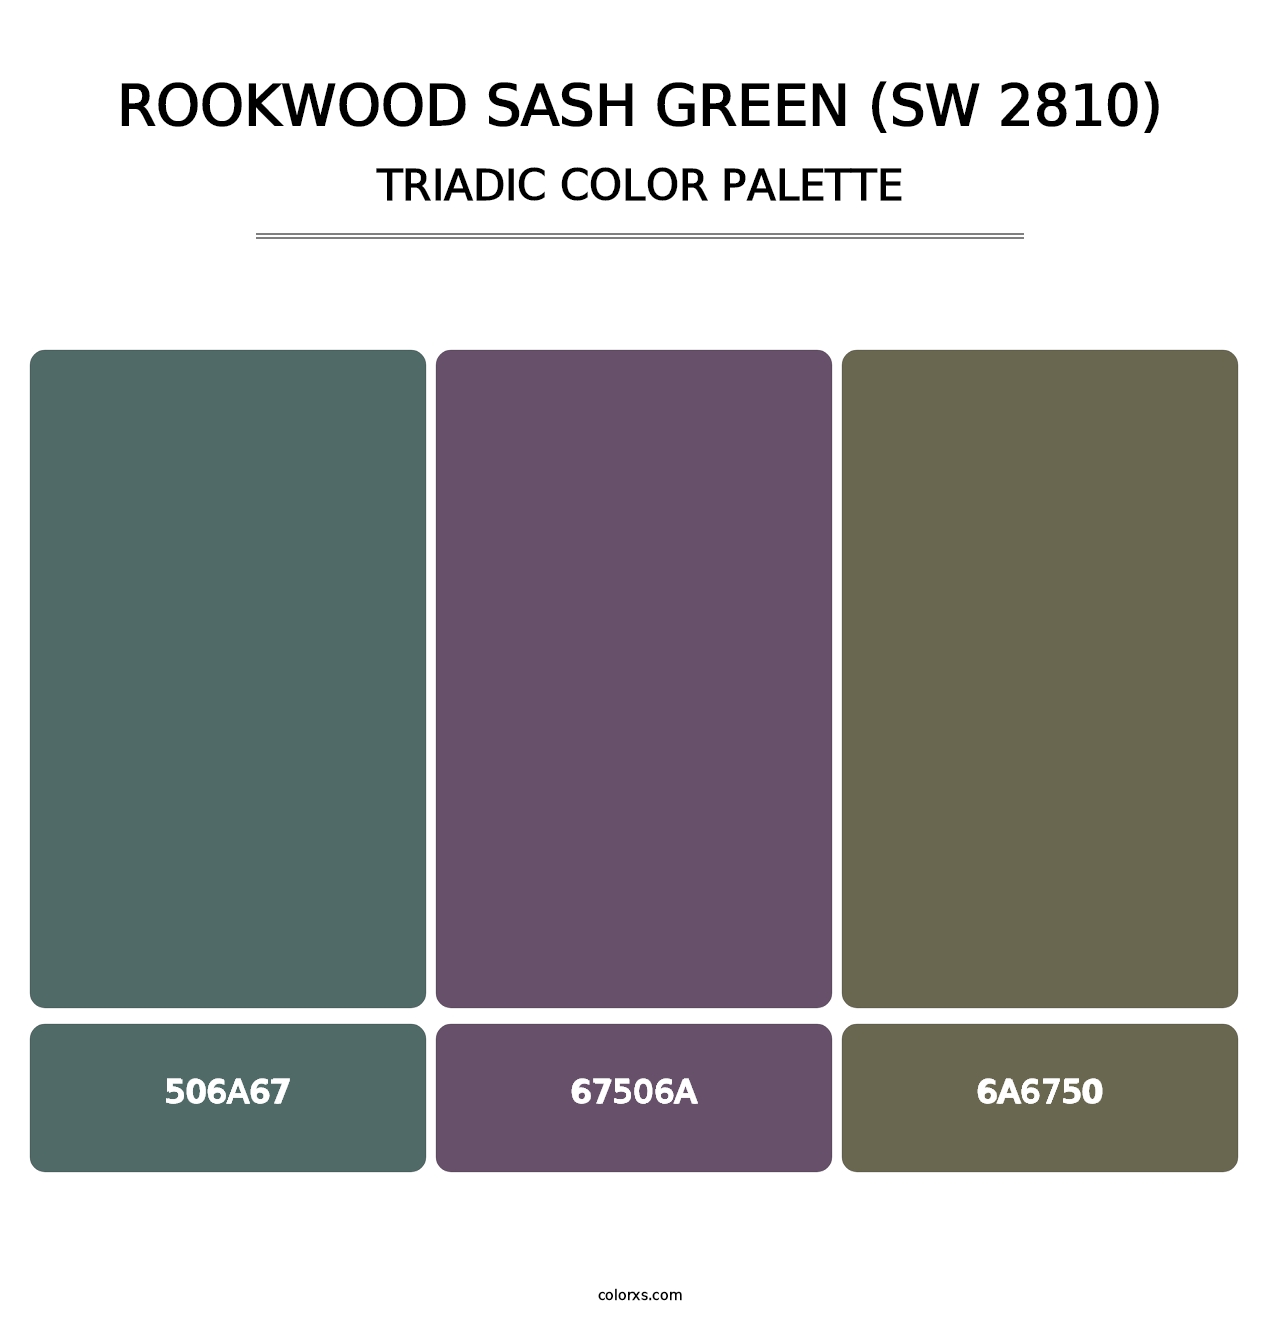 Rookwood Sash Green (SW 2810) - Triadic Color Palette